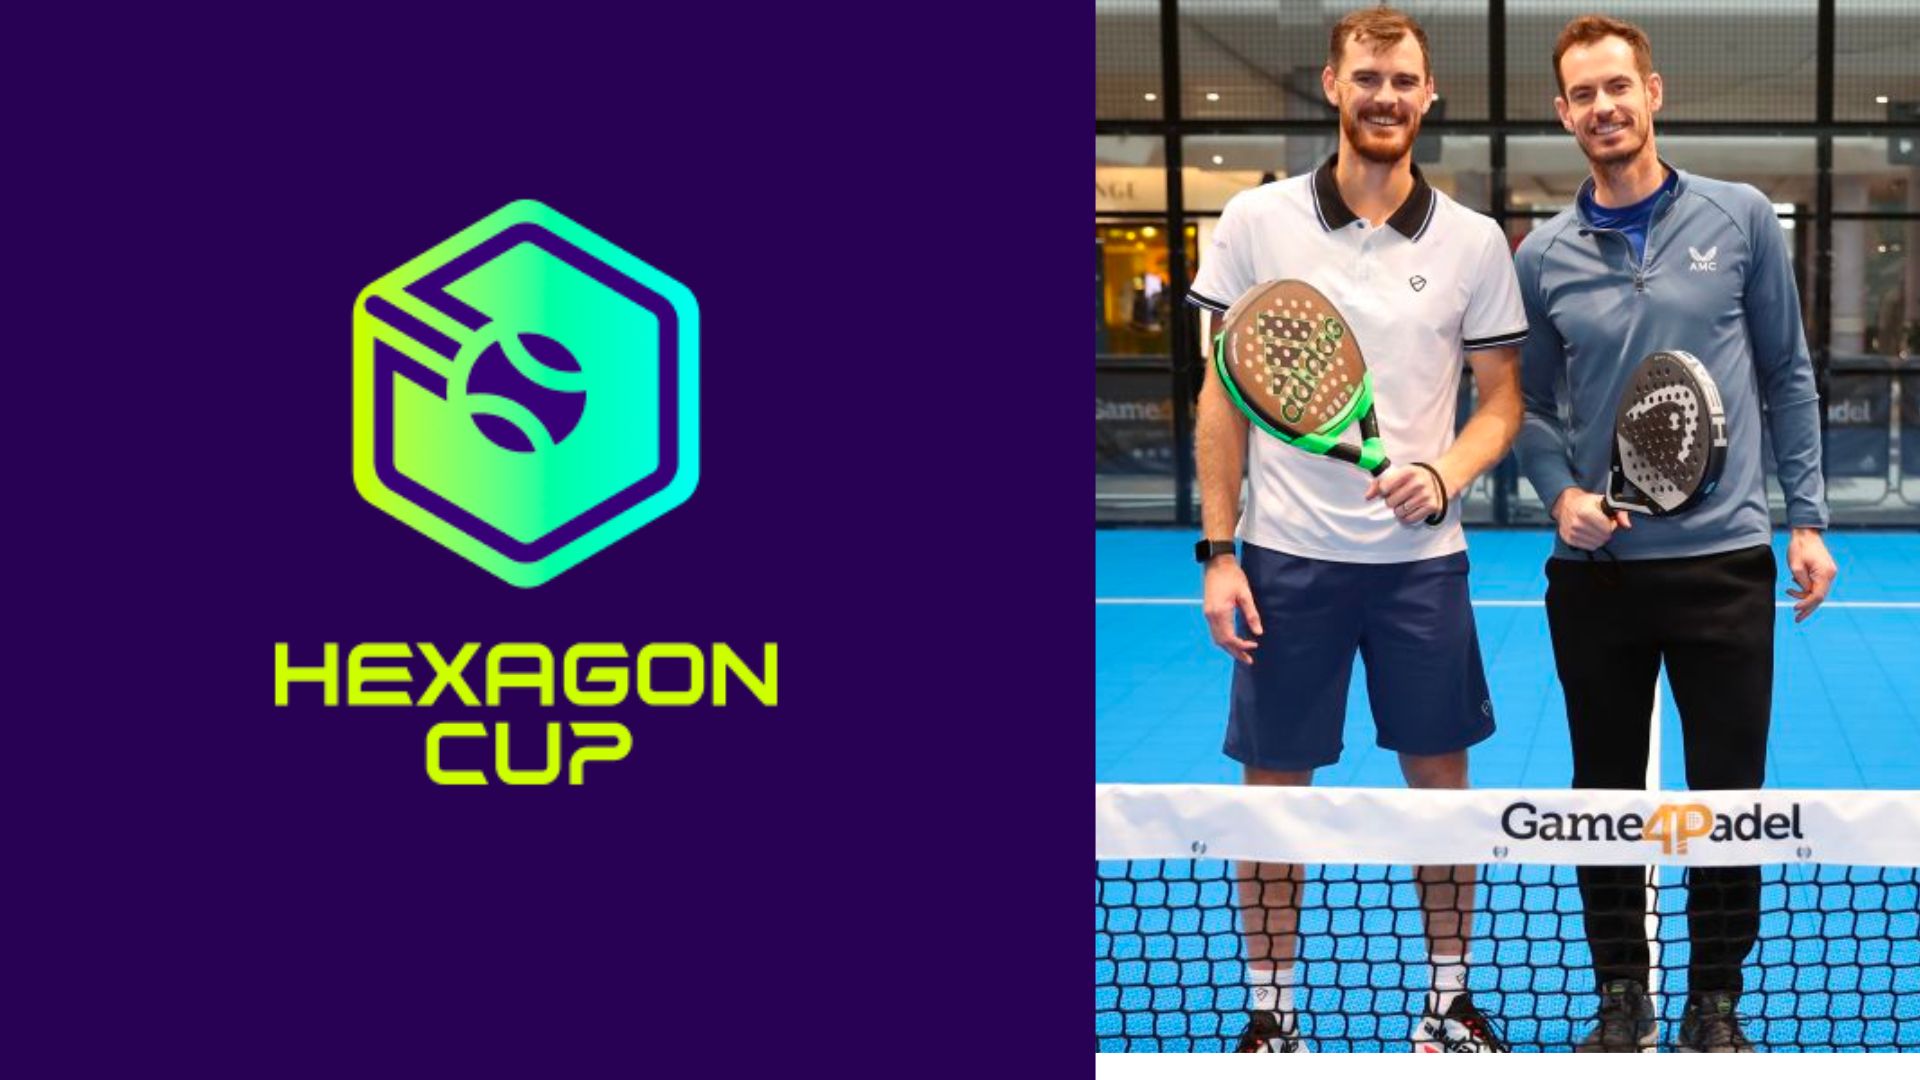 Hexagon Cup Announces New Team Owners in Andy Murray, Robert Lewandowski, and Rafael Nadal